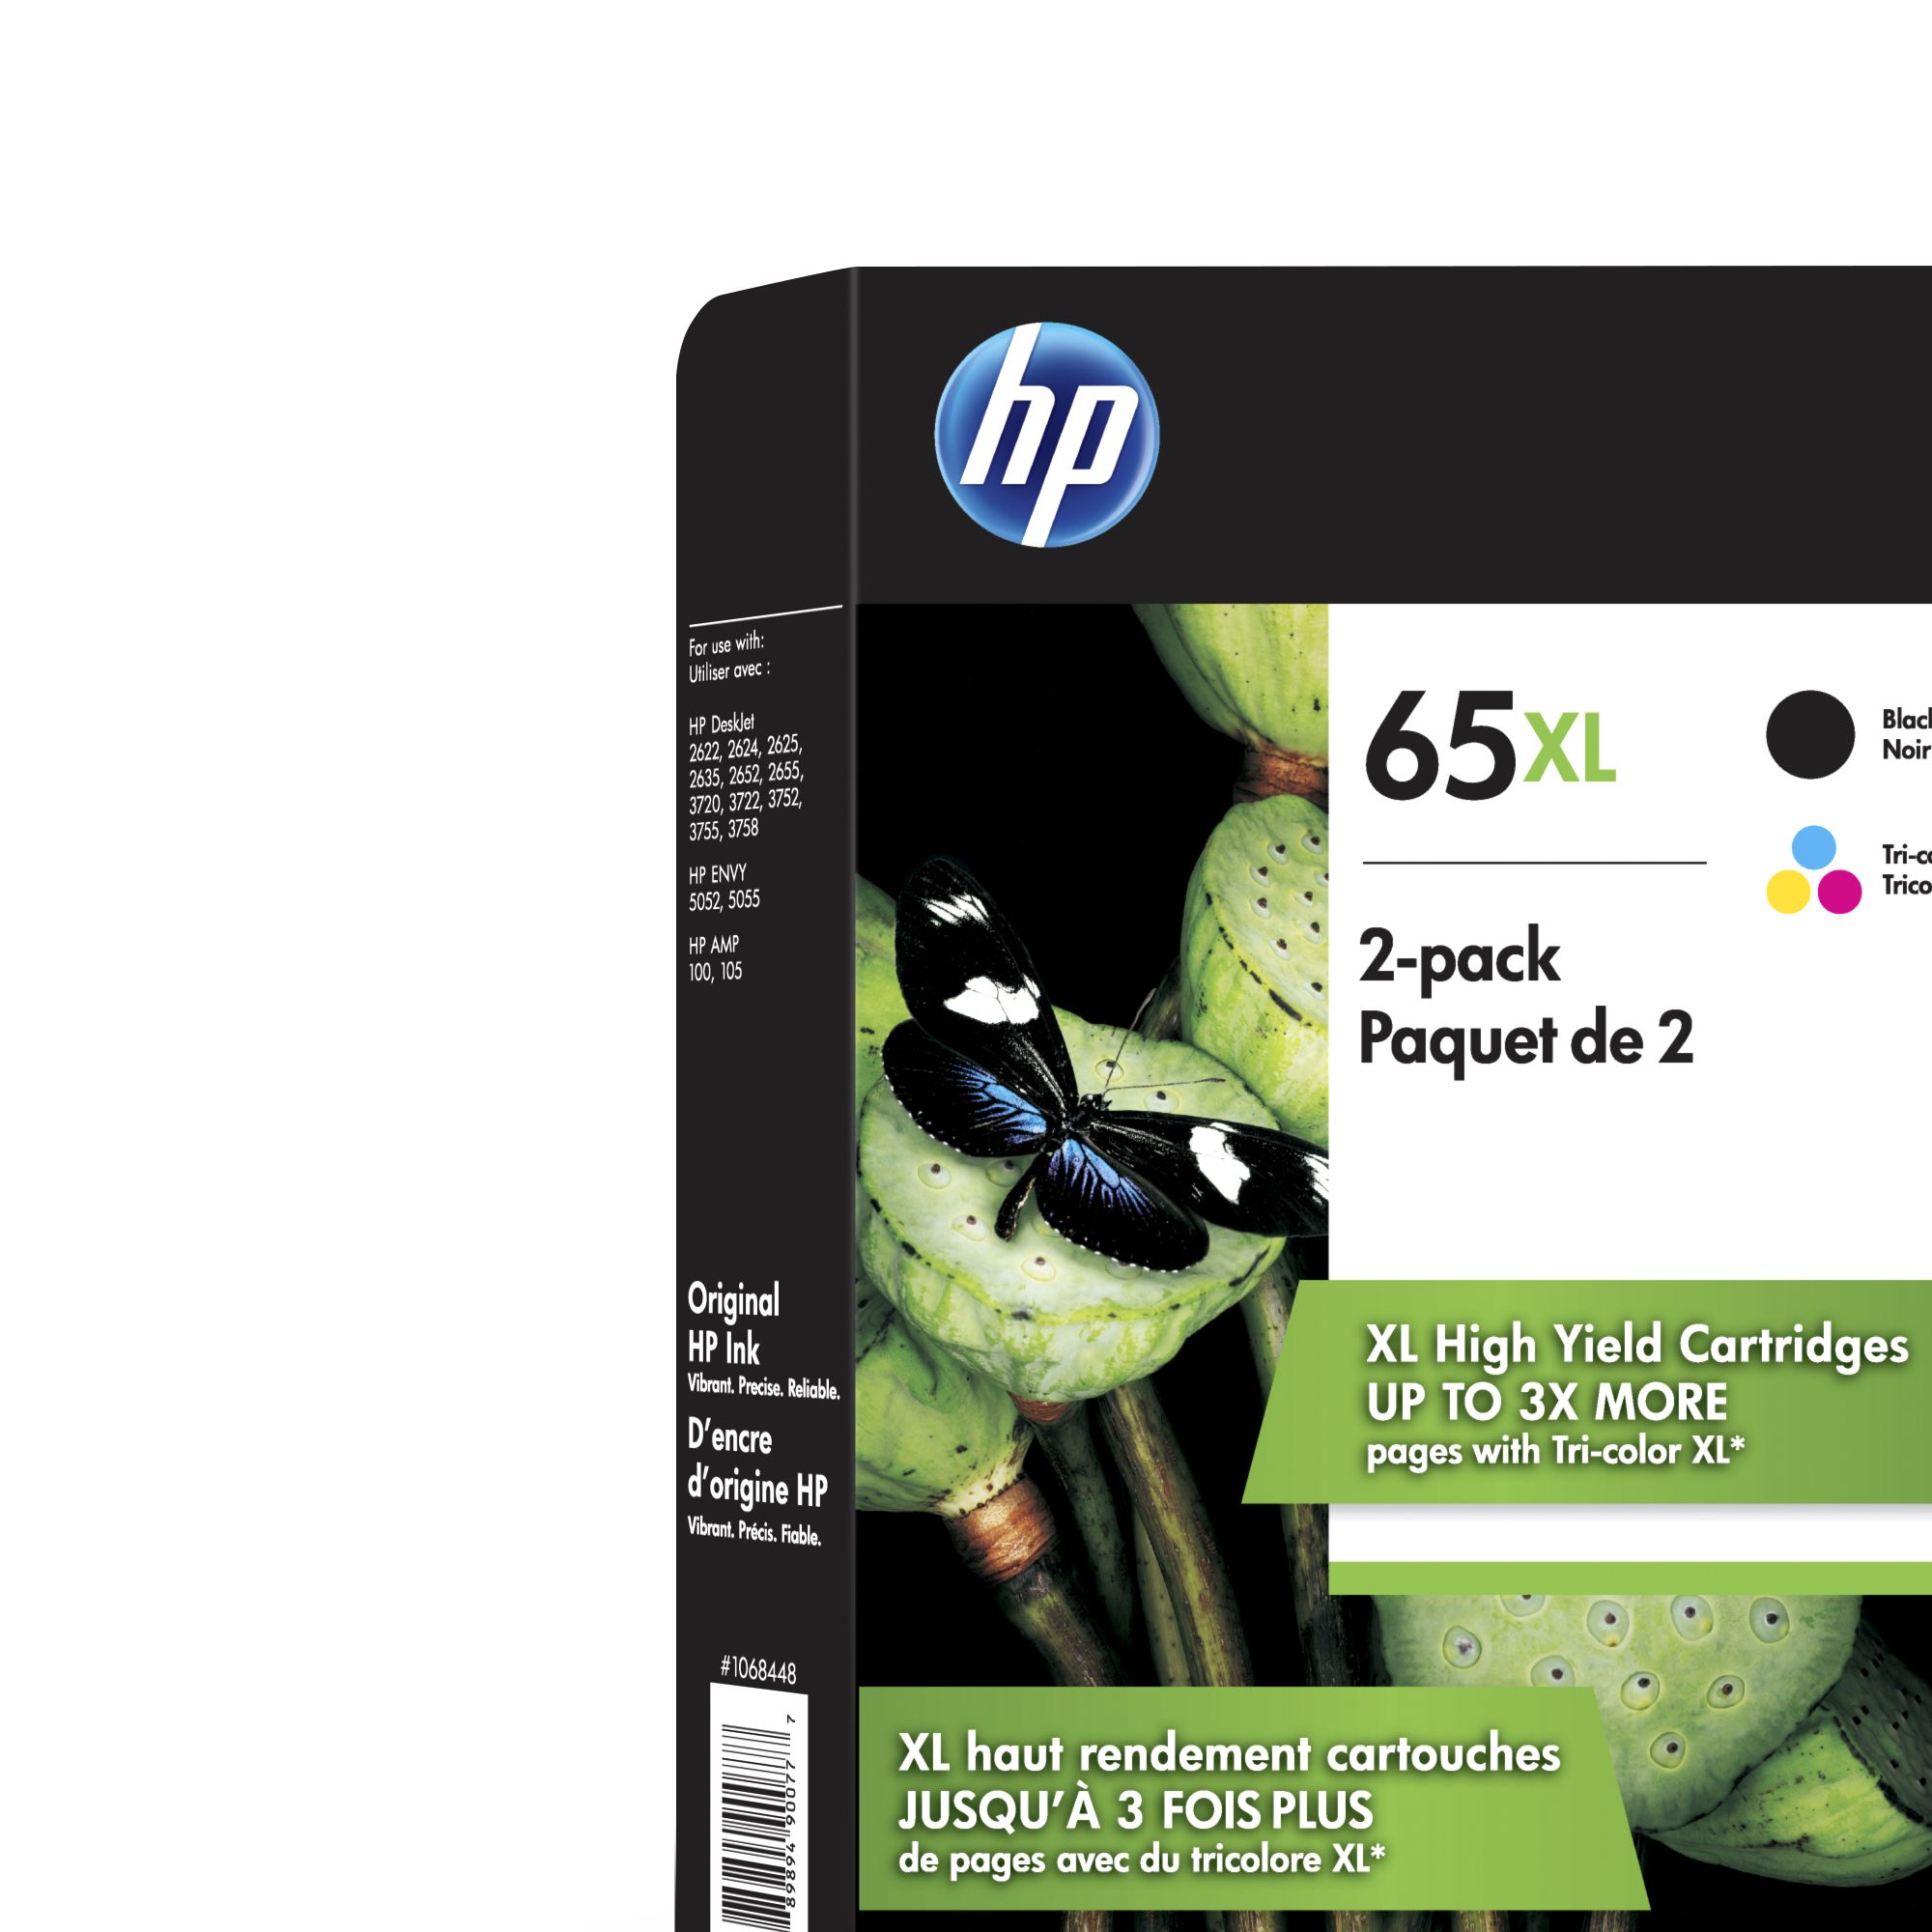 HP 62XL Series Black Original Printer Ink Cartridge